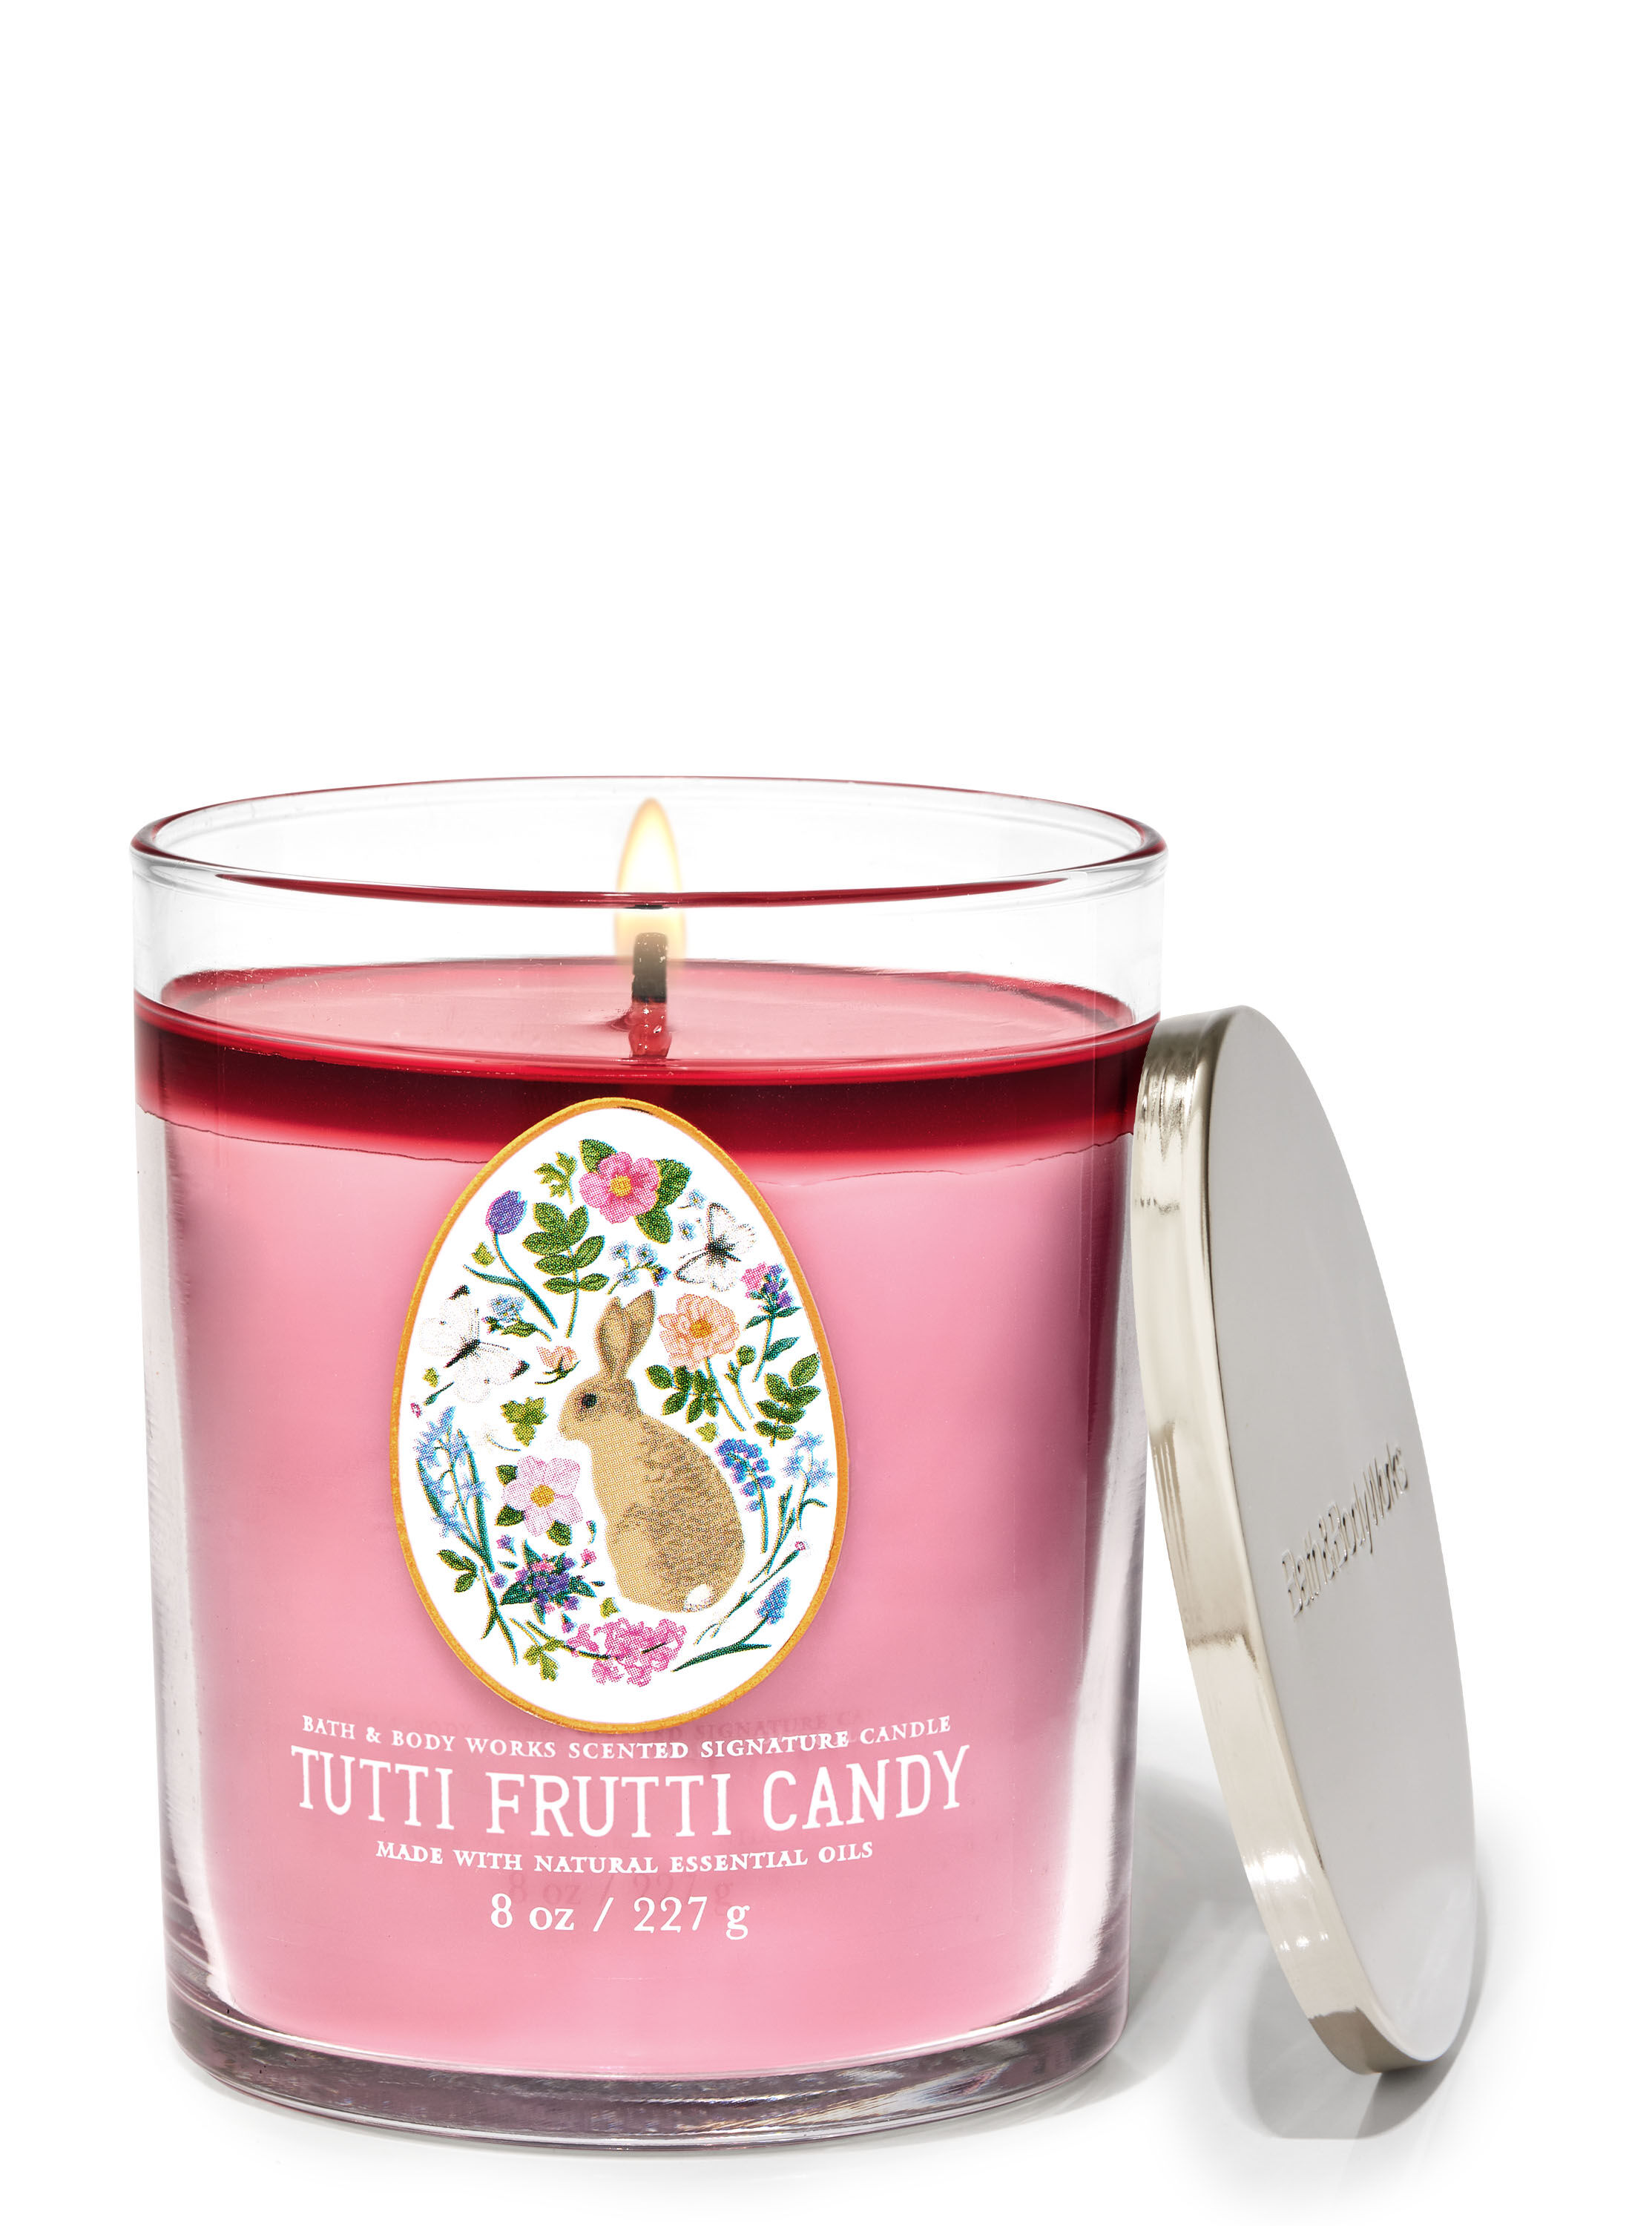 Tutti Frutti Candy Signature Single Wick Candle